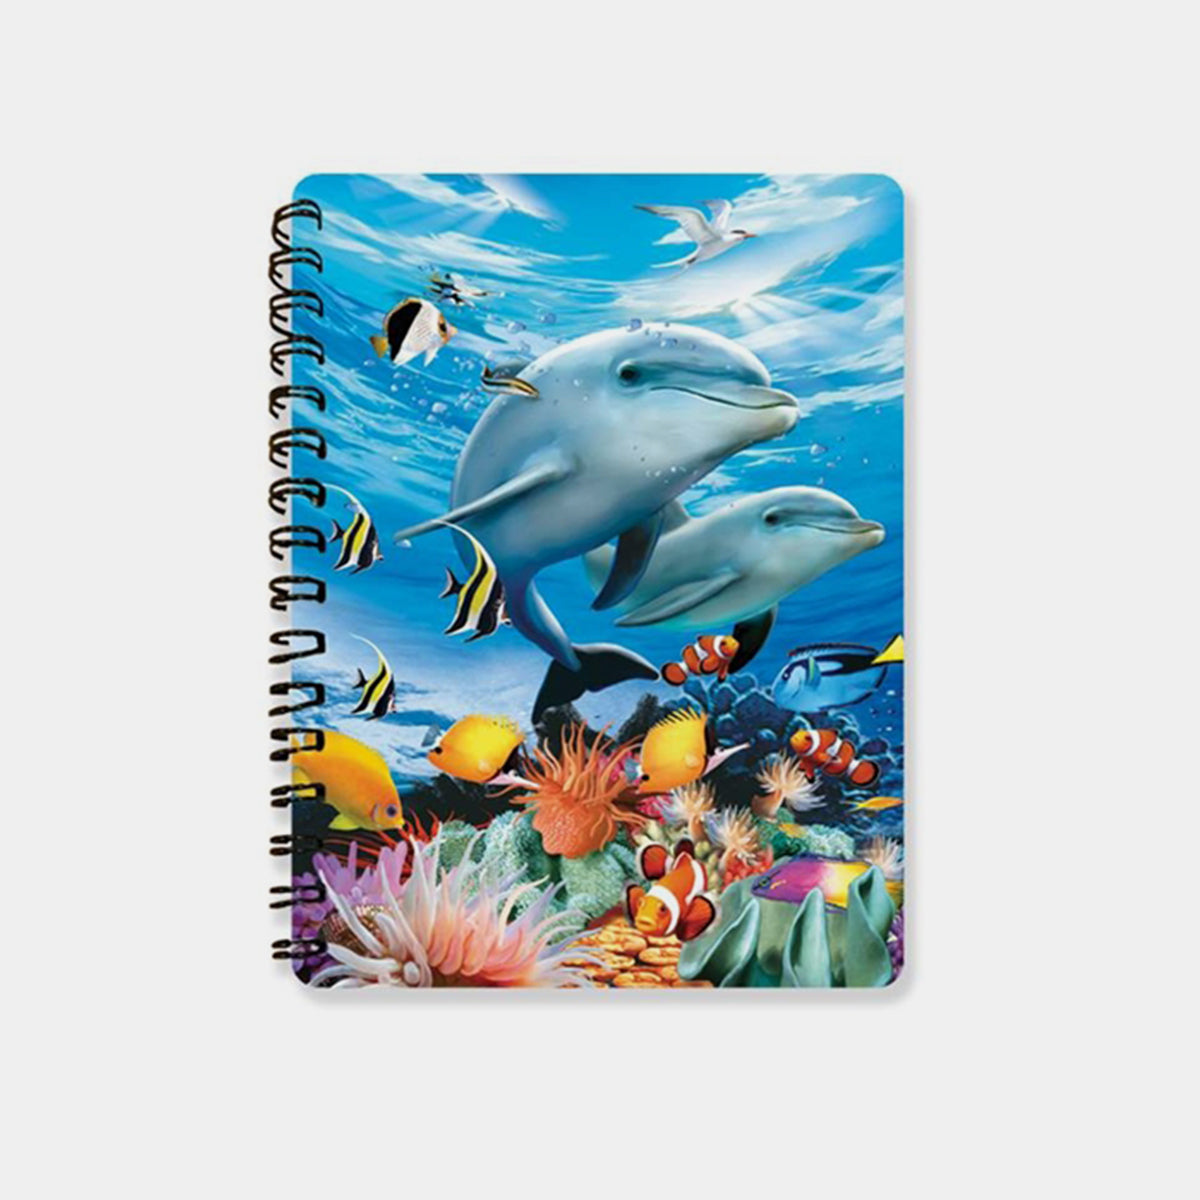 Beneath The Waves 3D Cover A6 Diary - Designer Studio - Showpiece